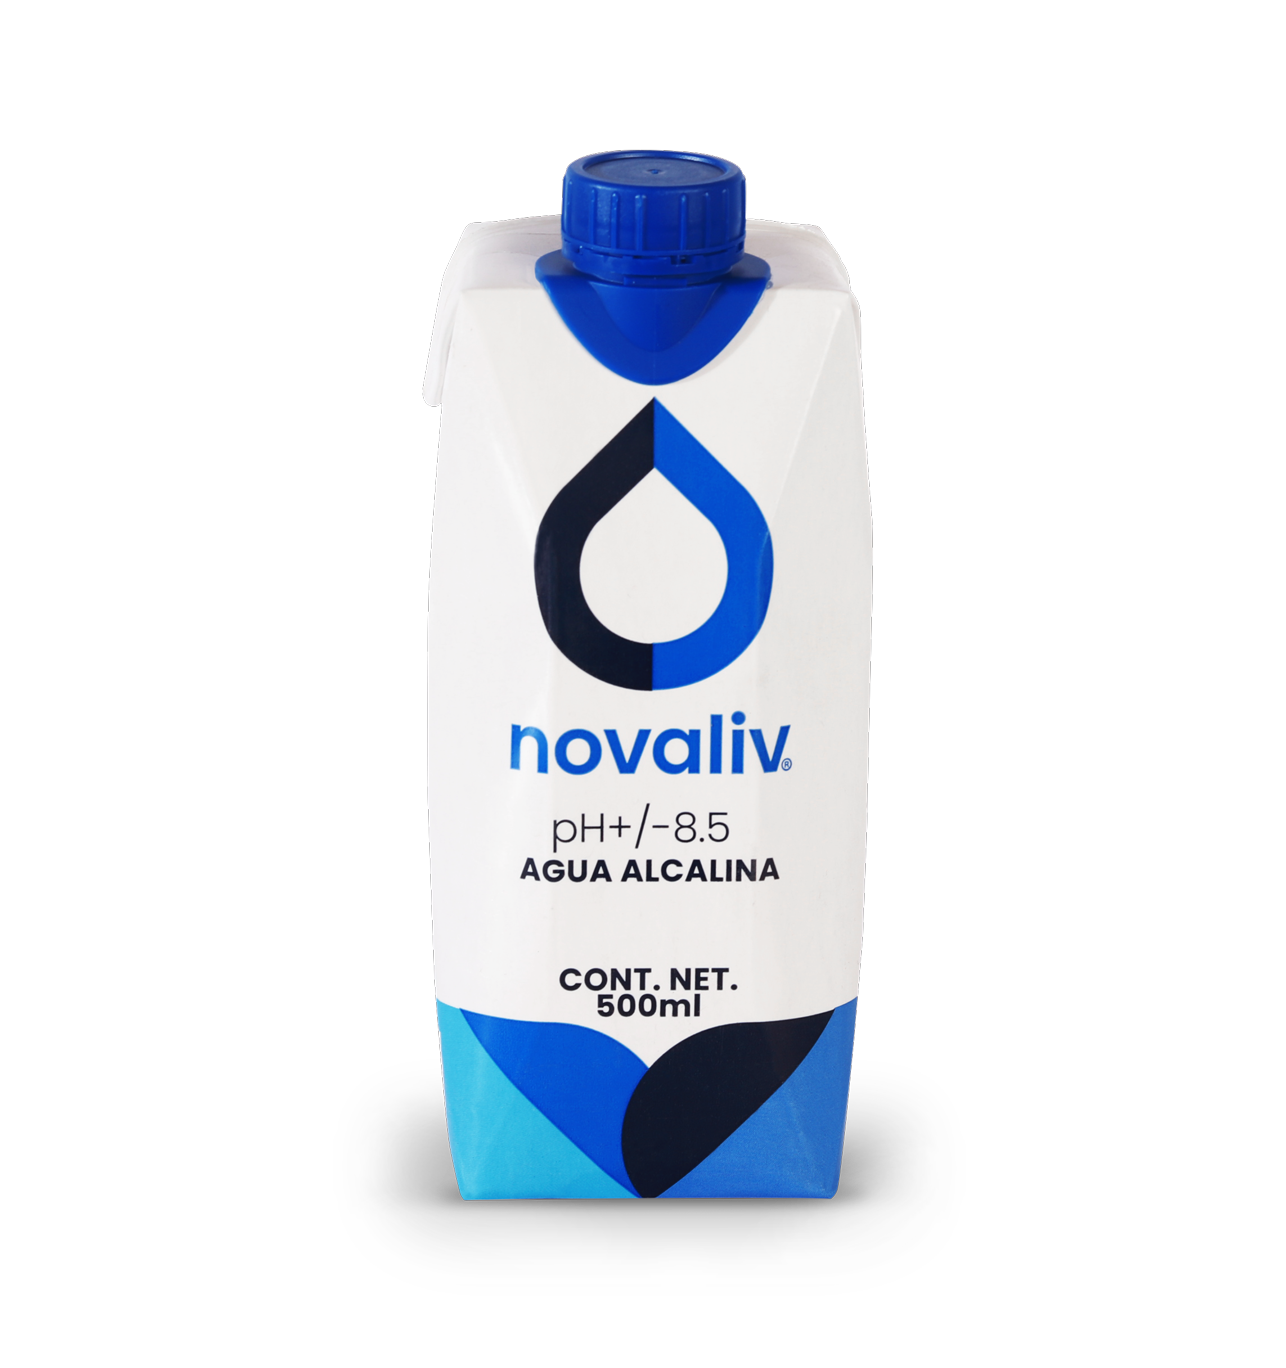 Novaliv Agua Alcalina TetraPak 12 x 500 ml - Novaliv